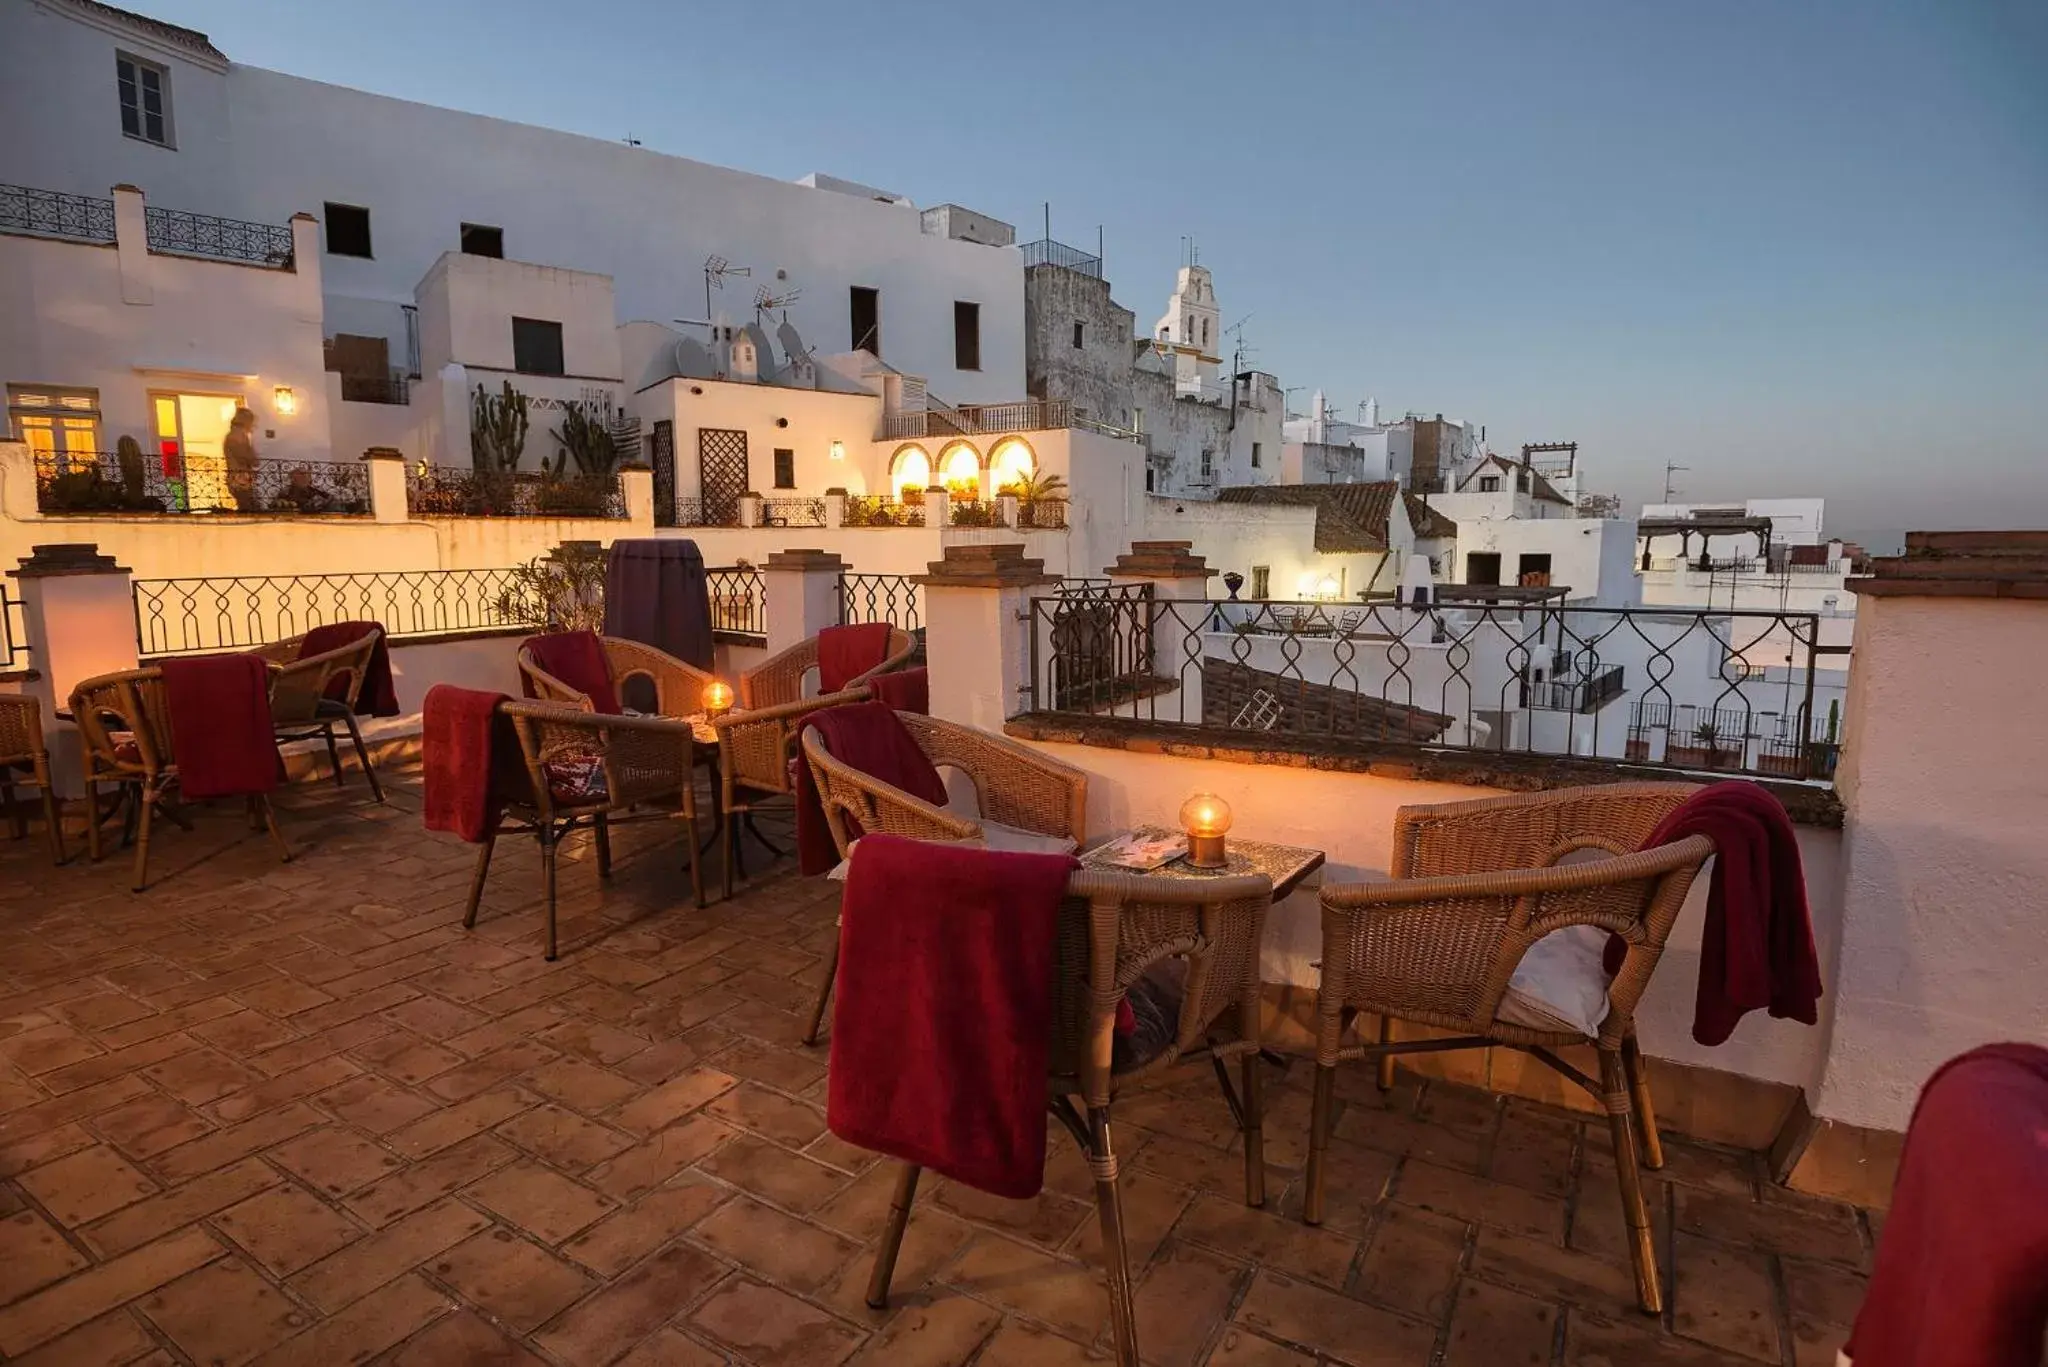 Area and facilities, Restaurant/Places to Eat in Hotel La Casa del Califa